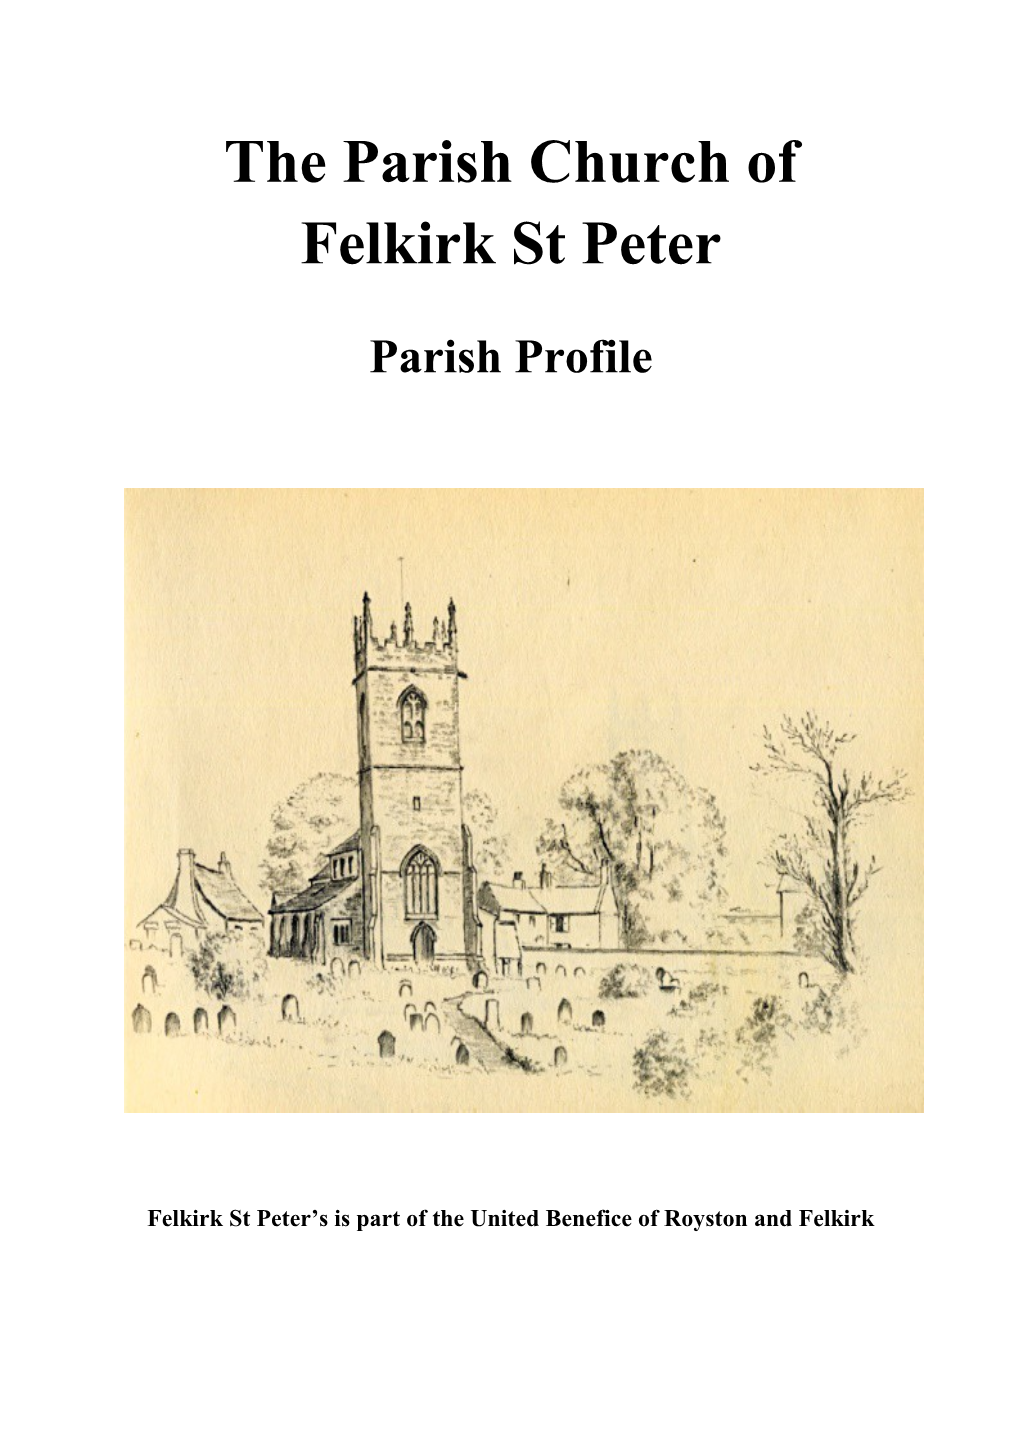 The Parish Church of Felkirk St Peter